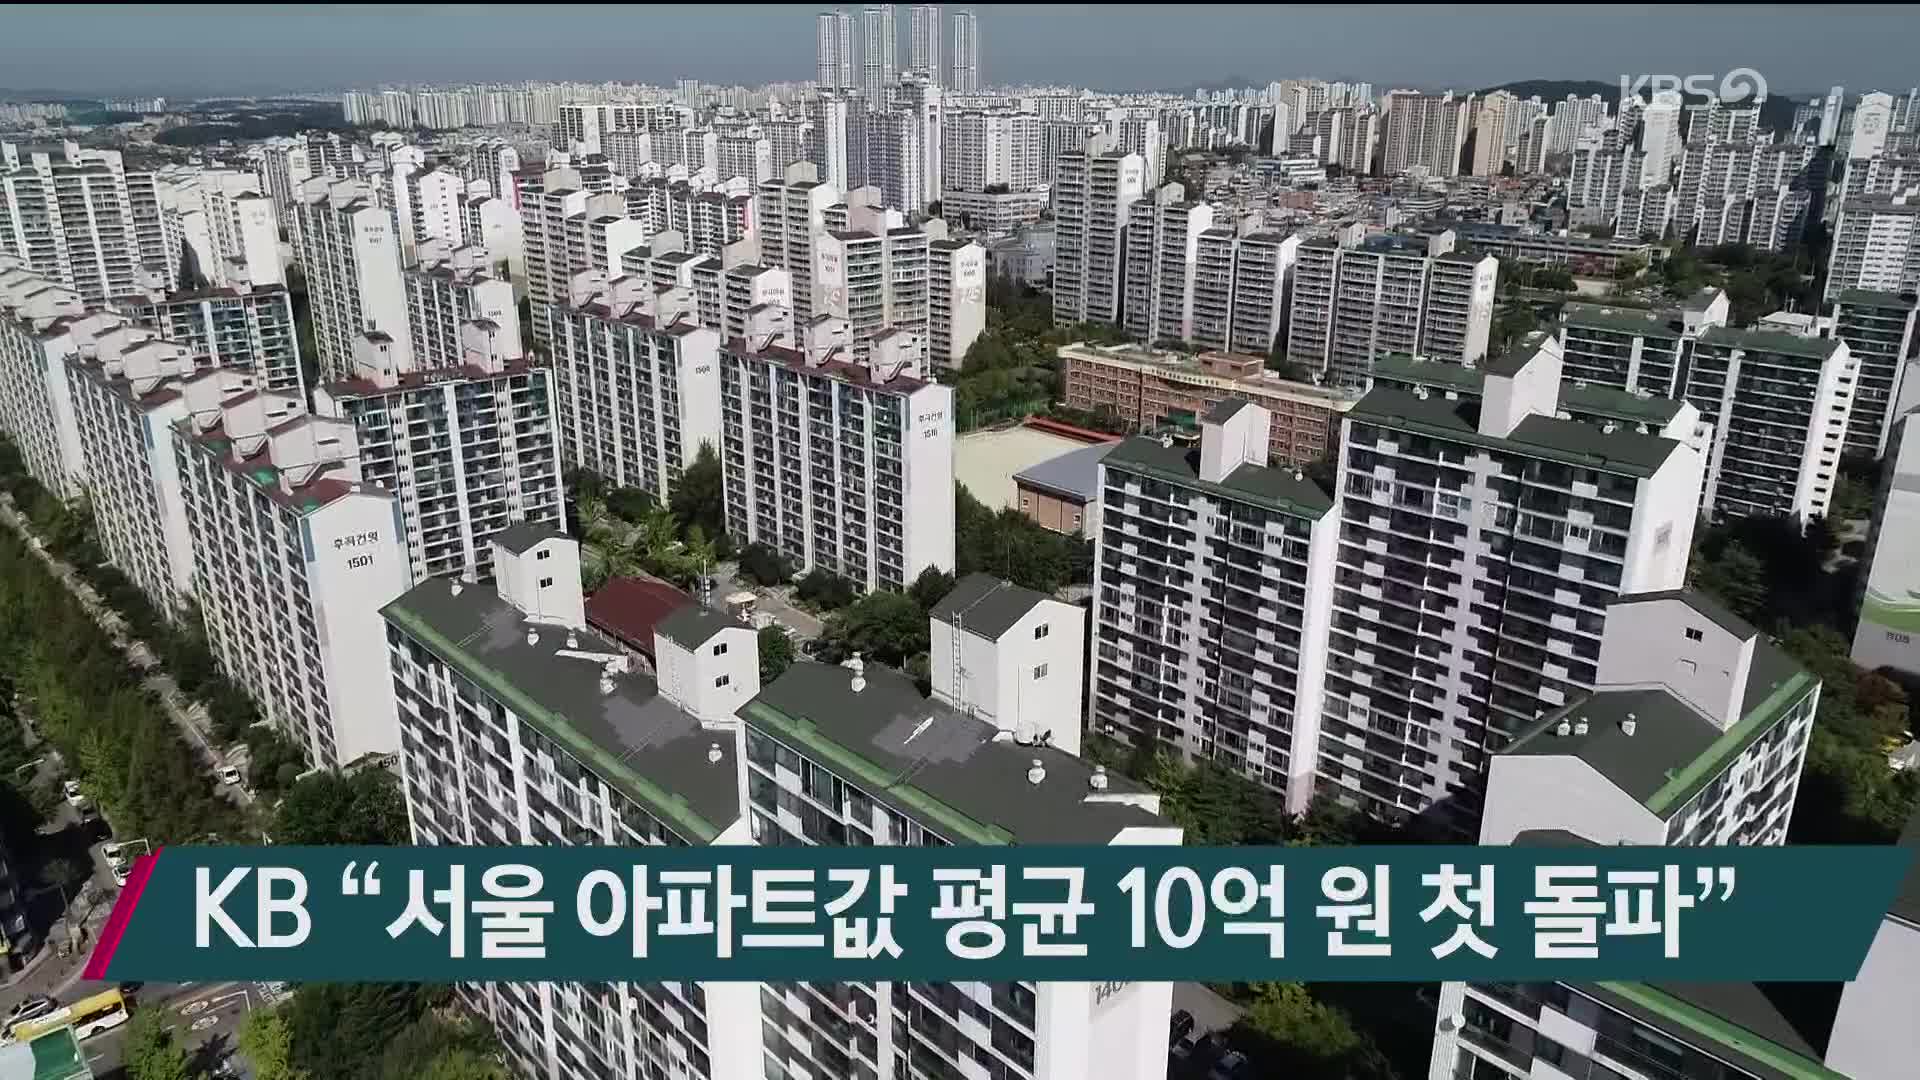 KB “서울 아파트값 평균 10억 원 첫 돌파”